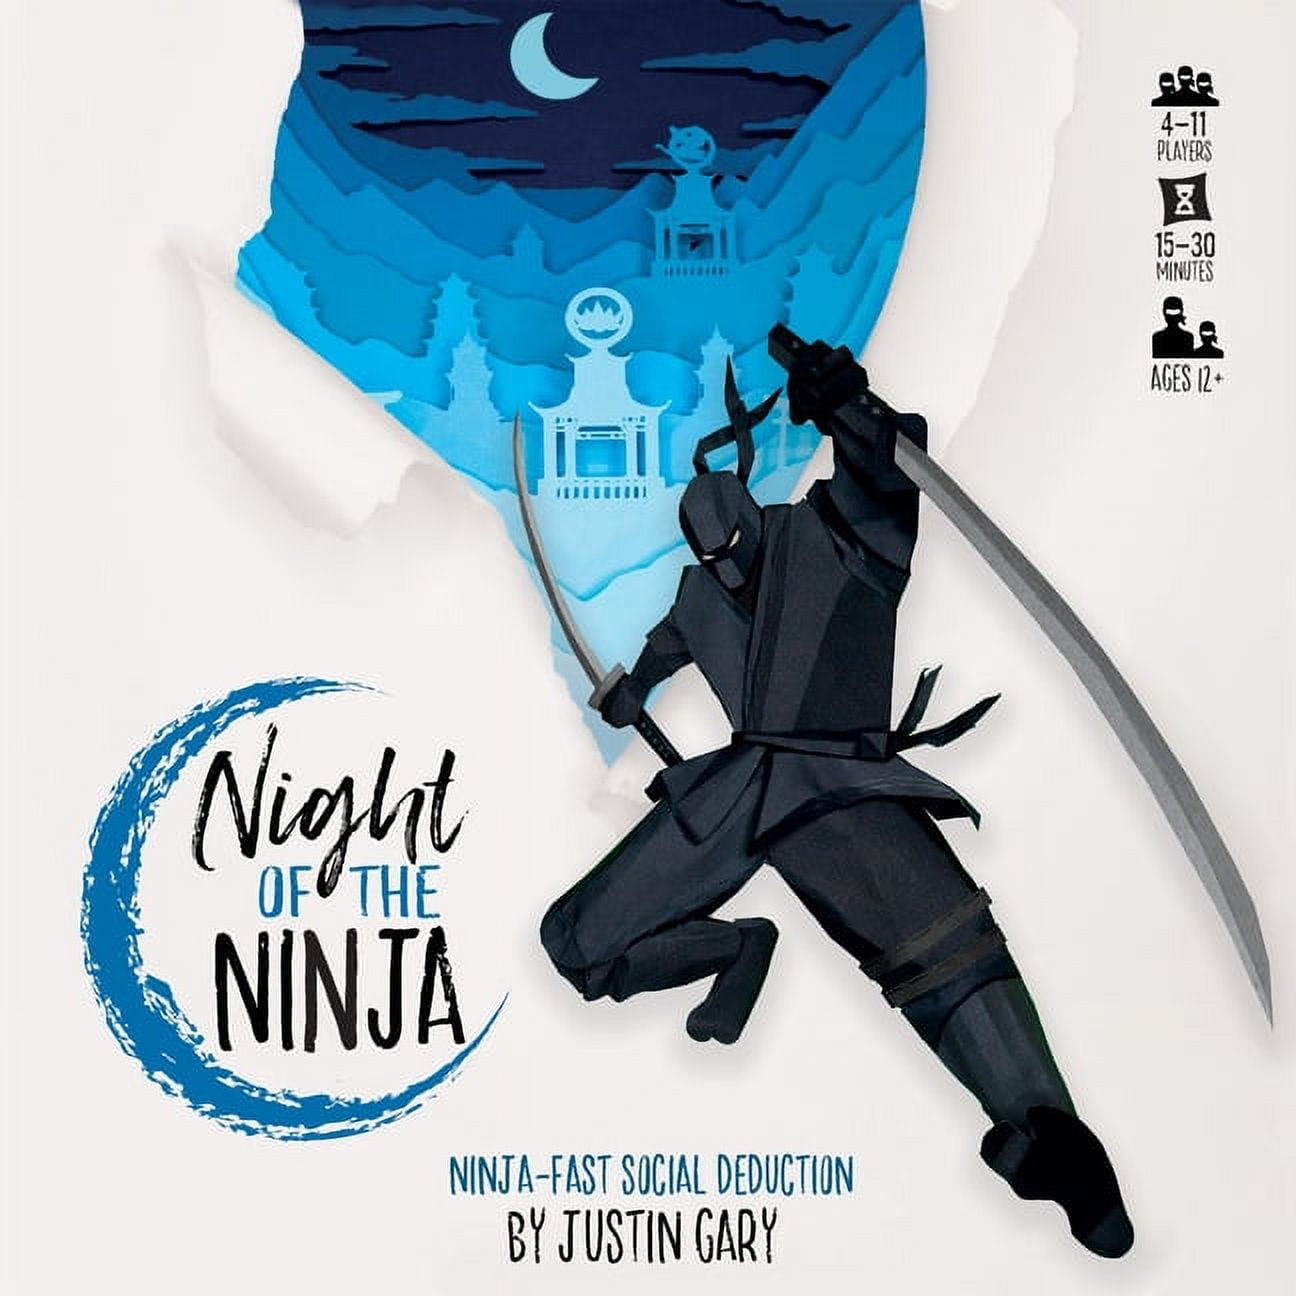 Ninja, Other